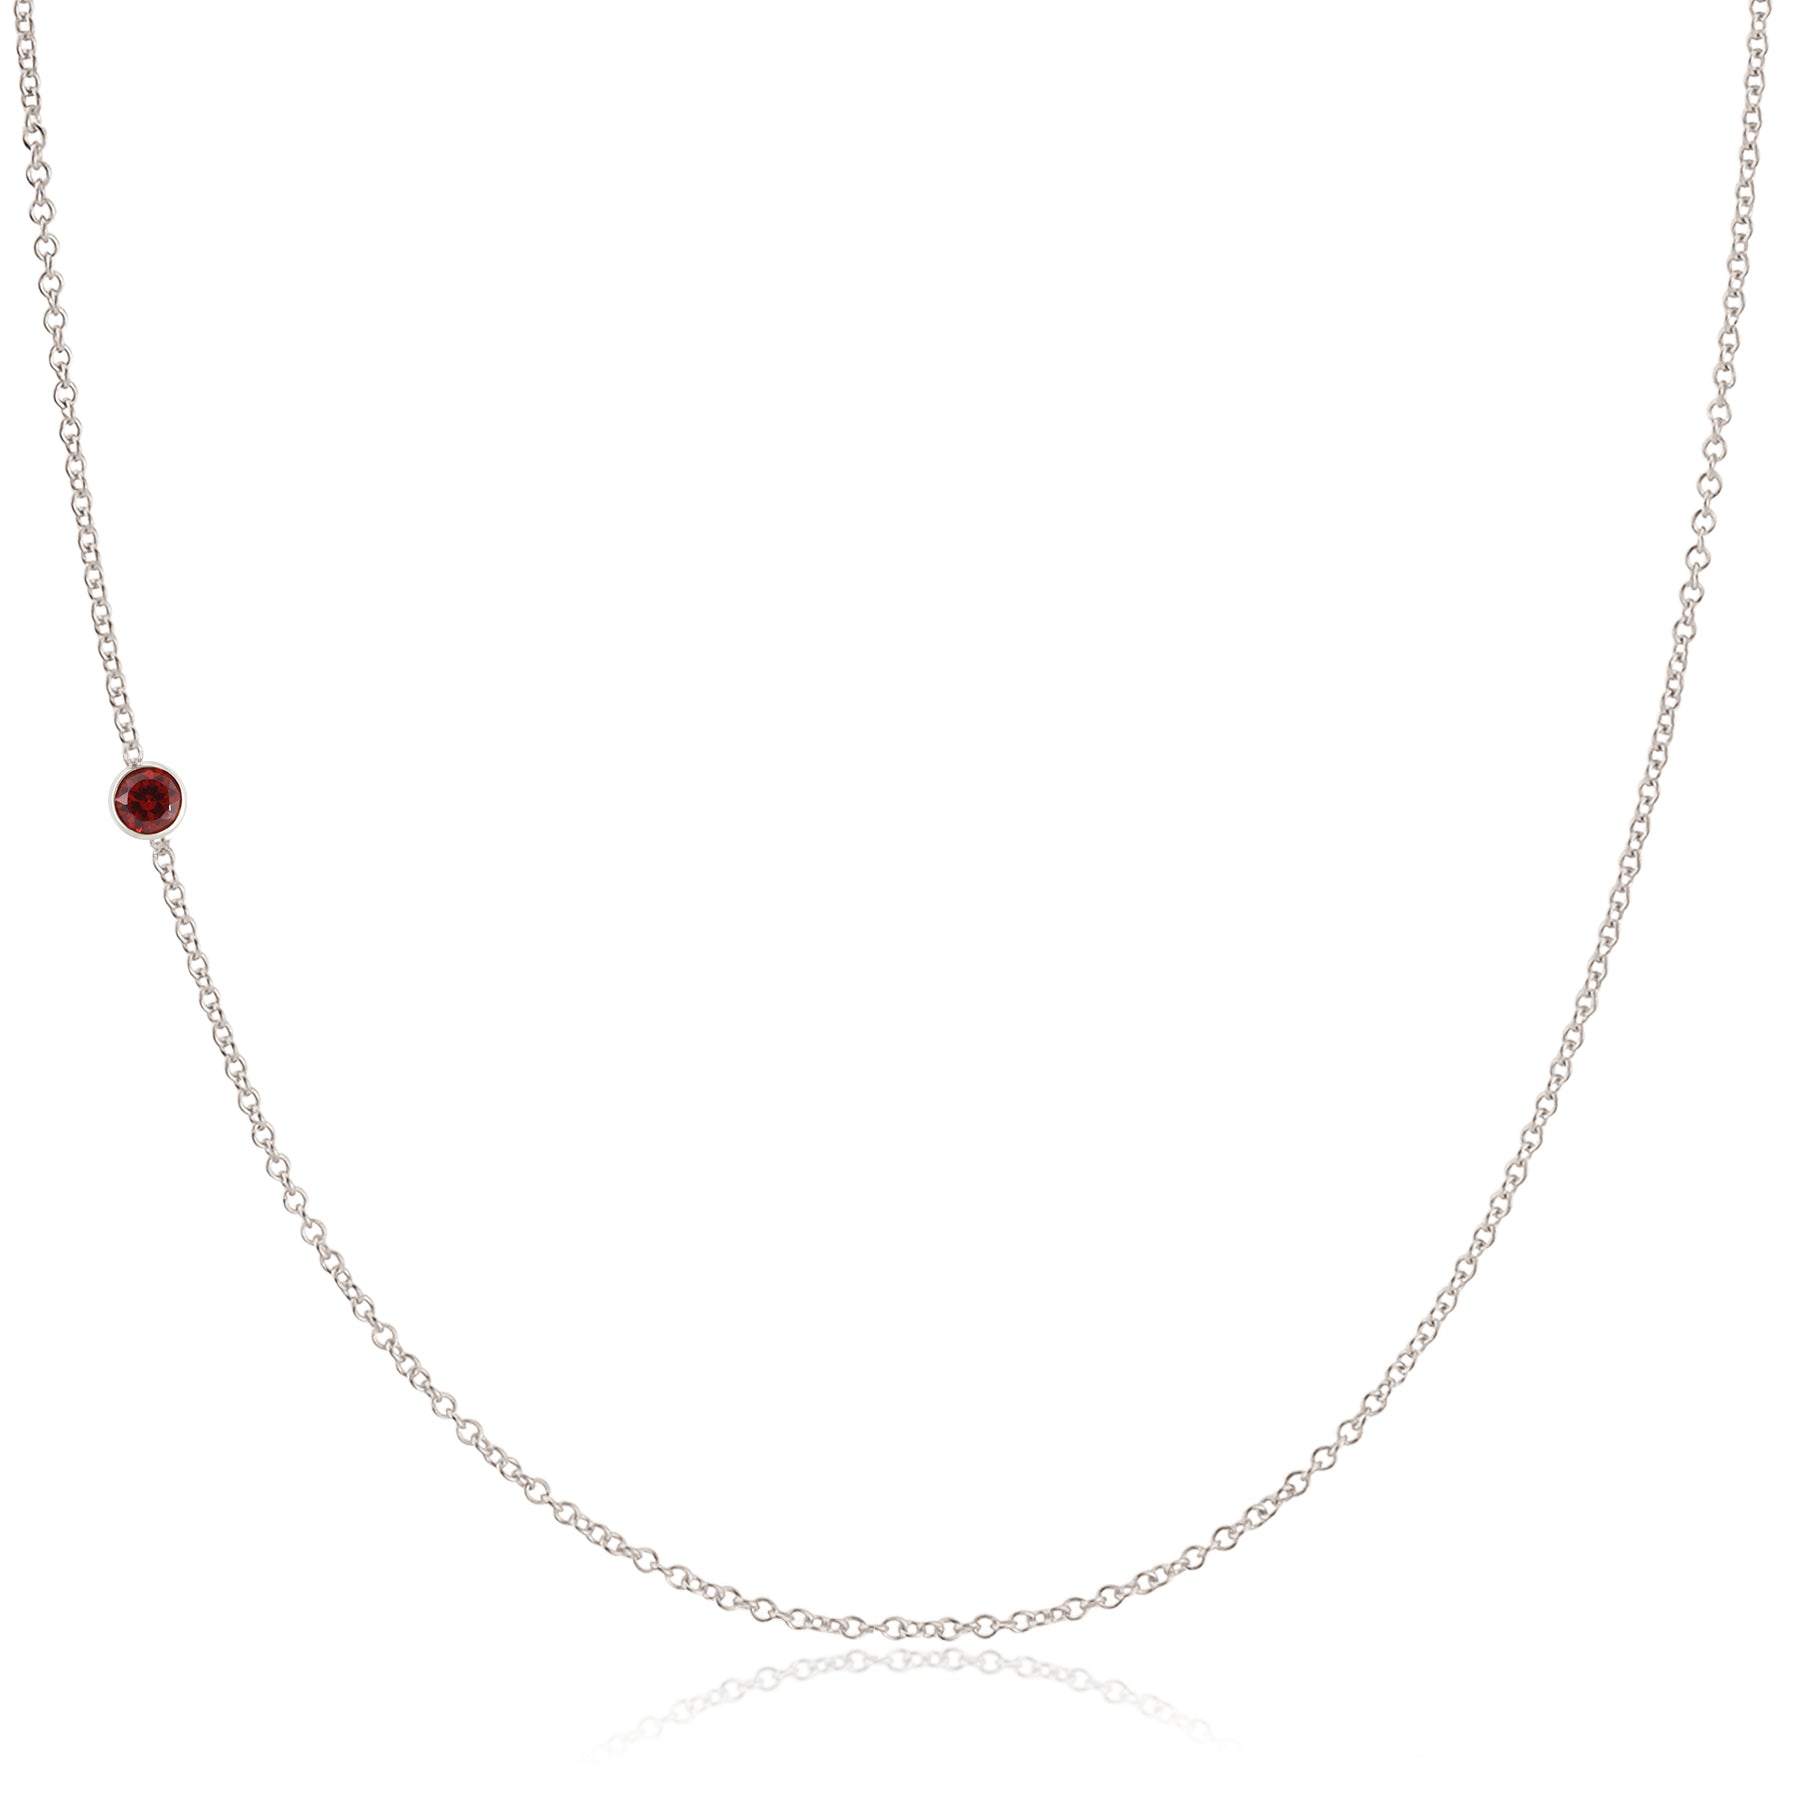 14K Gold Asymmetrical Birthstone Necklace - Garnet (January)